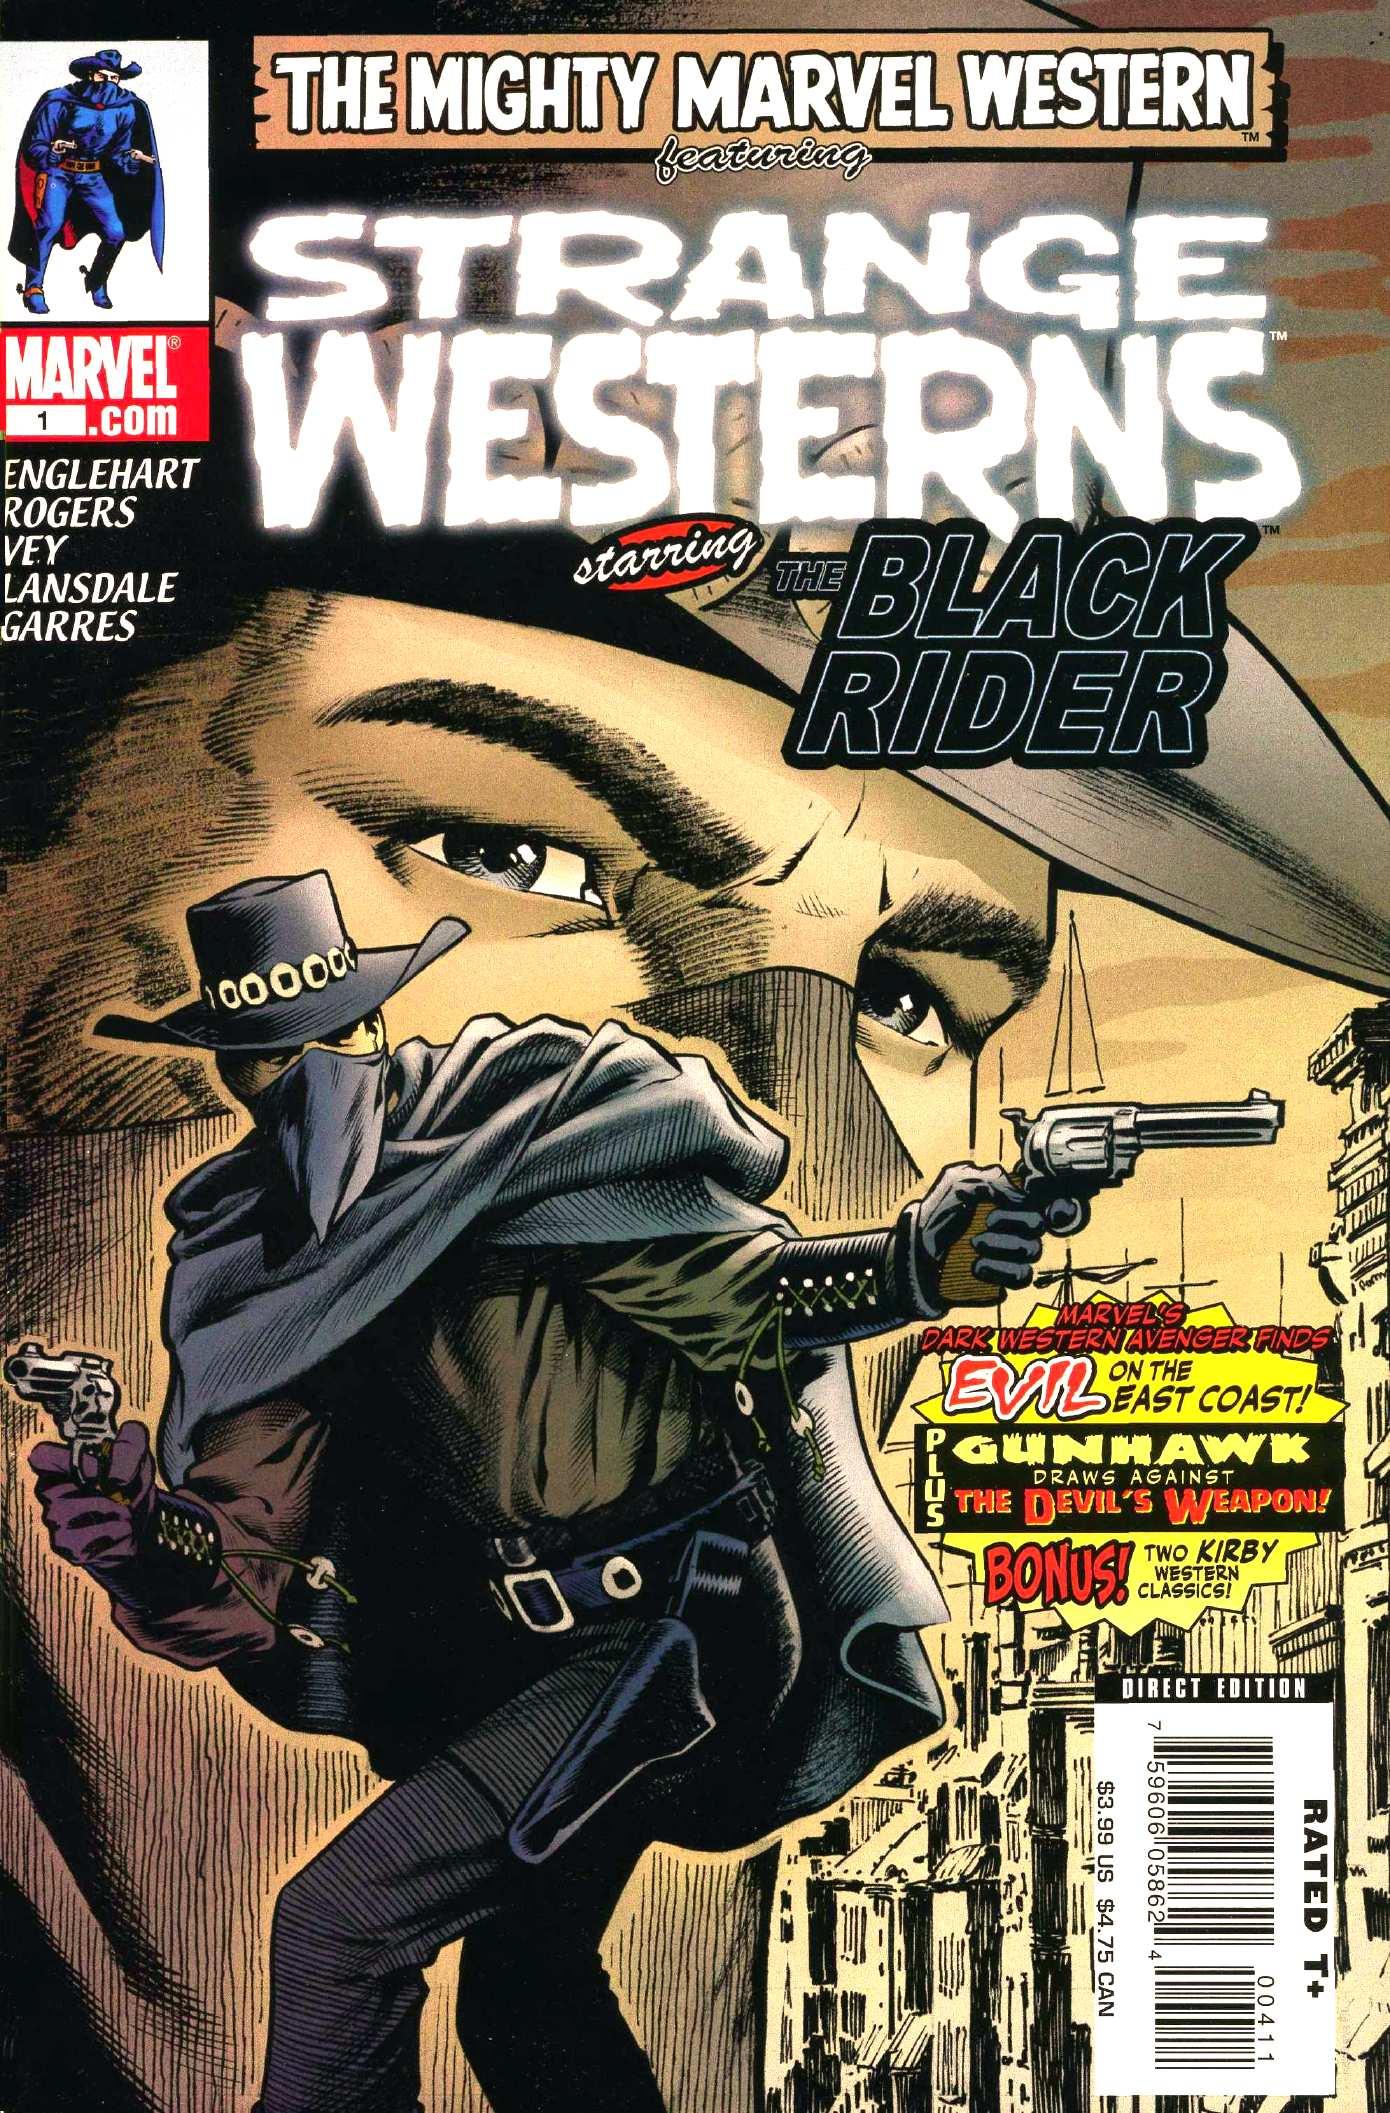 Marvel Westerns: Strange Westerns Starring the Black Rider Vol. 1 #1